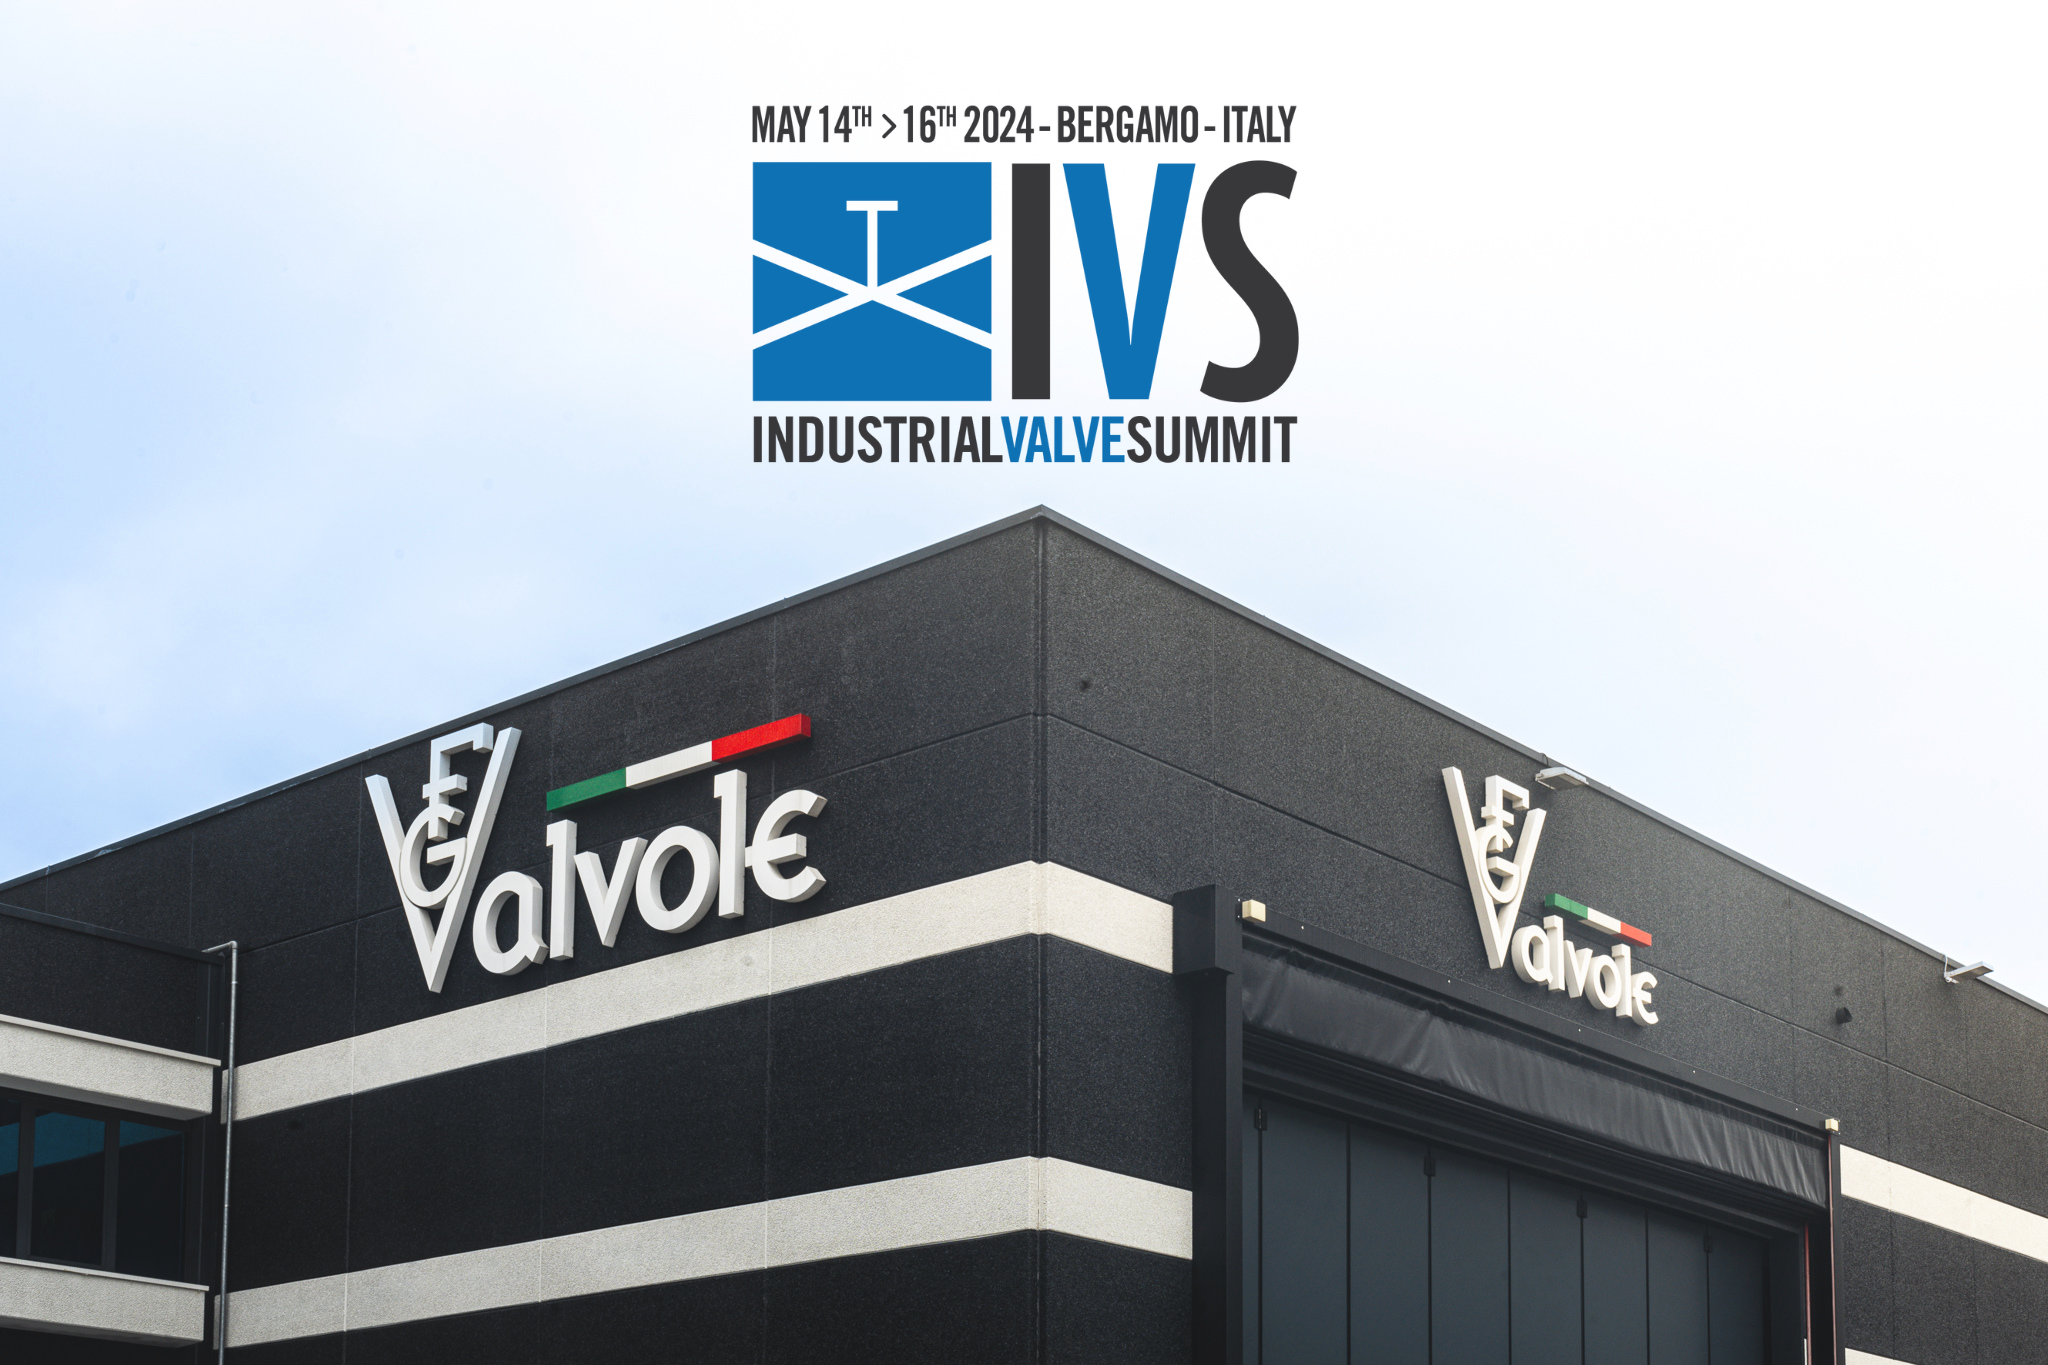 FG Valvole goes to… IVS!